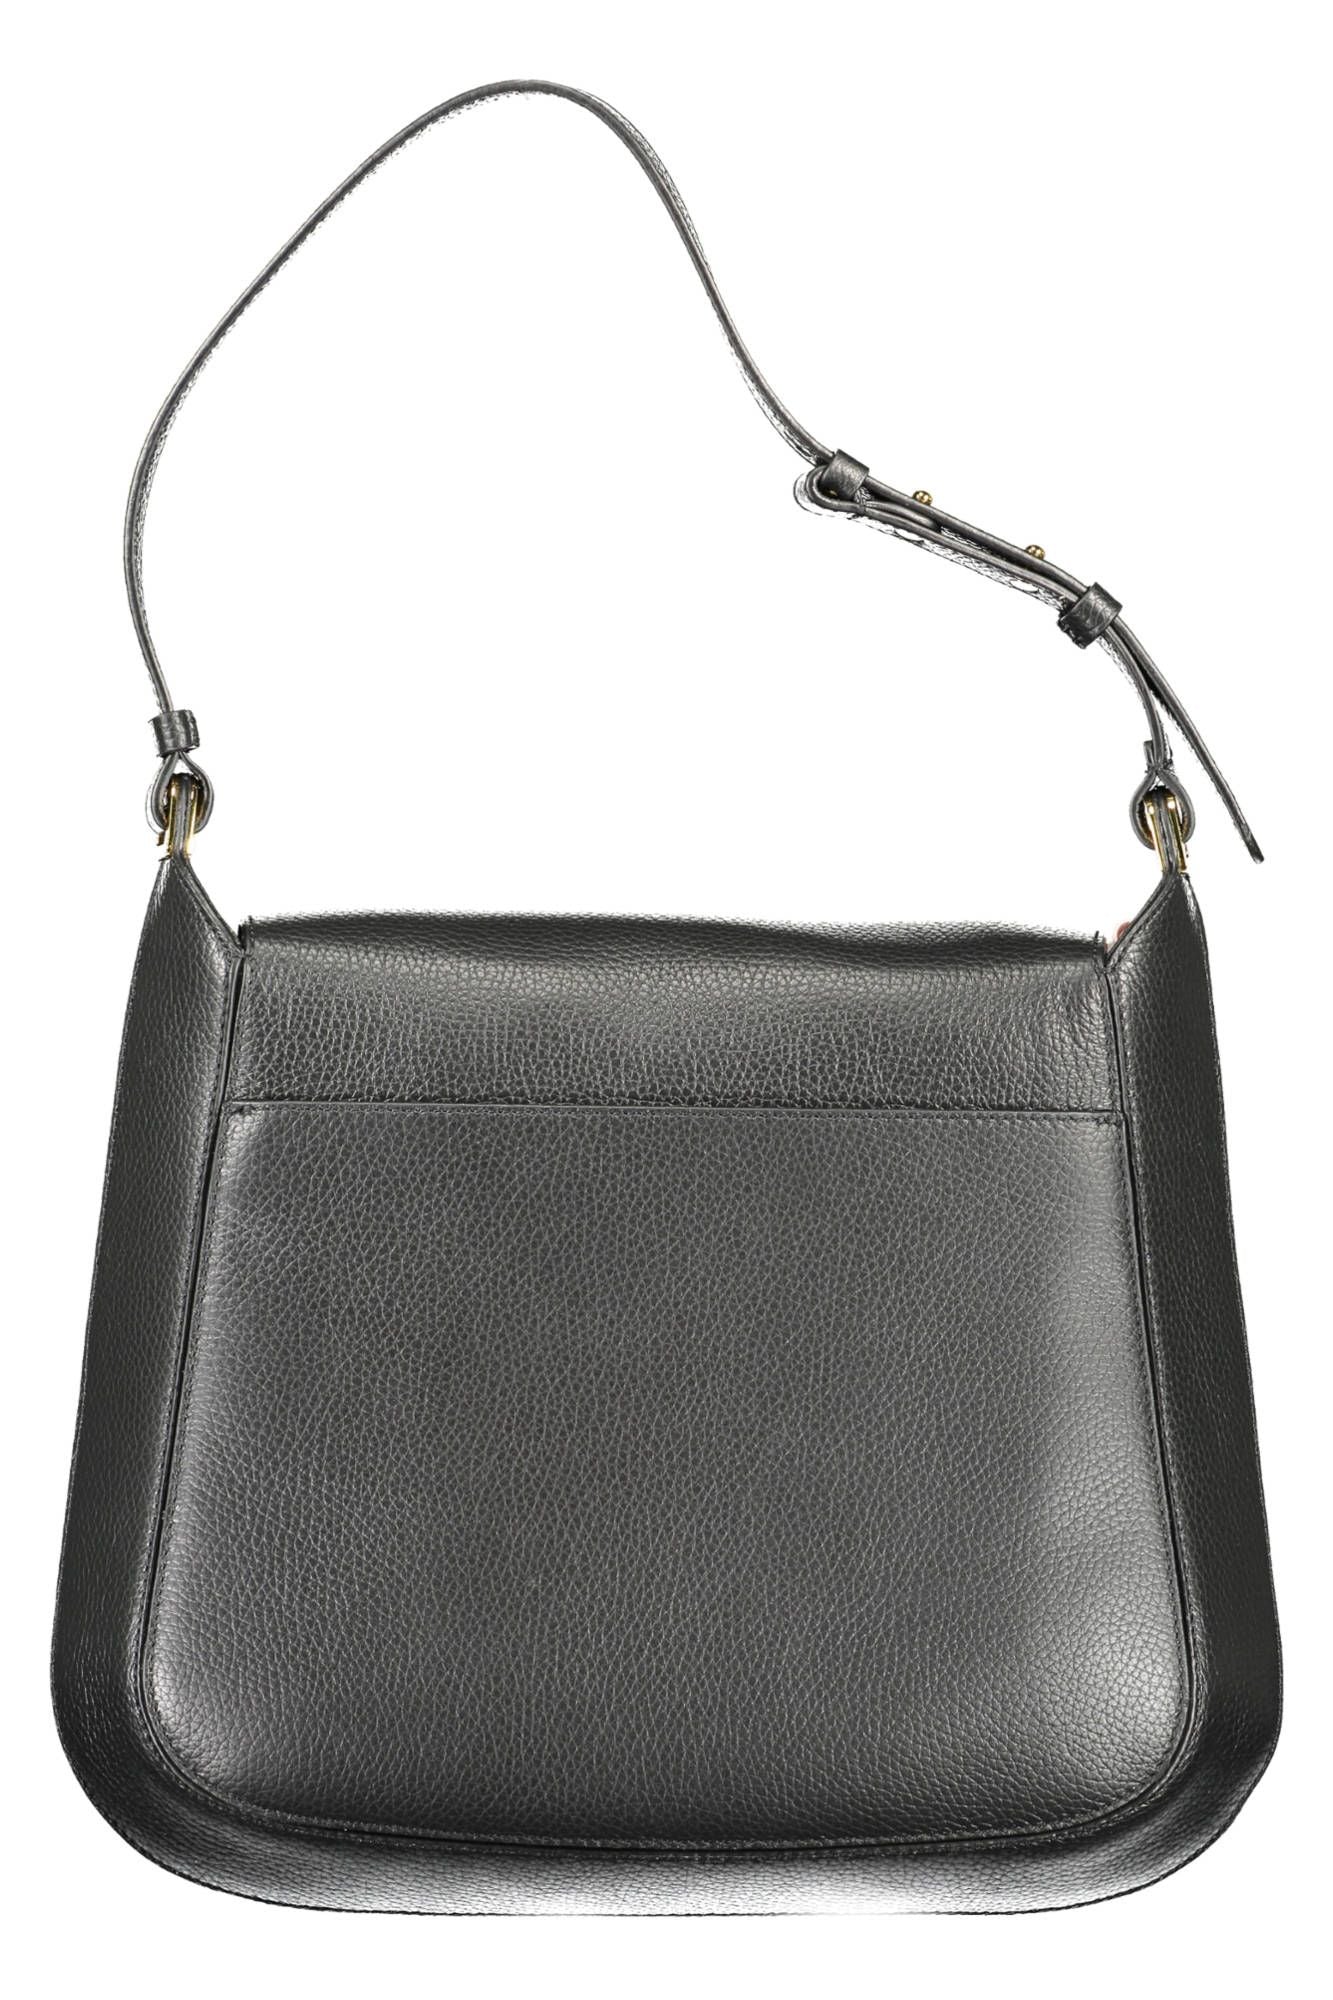 Elegant Leather Shoulder Bag with Turn Lock Closure